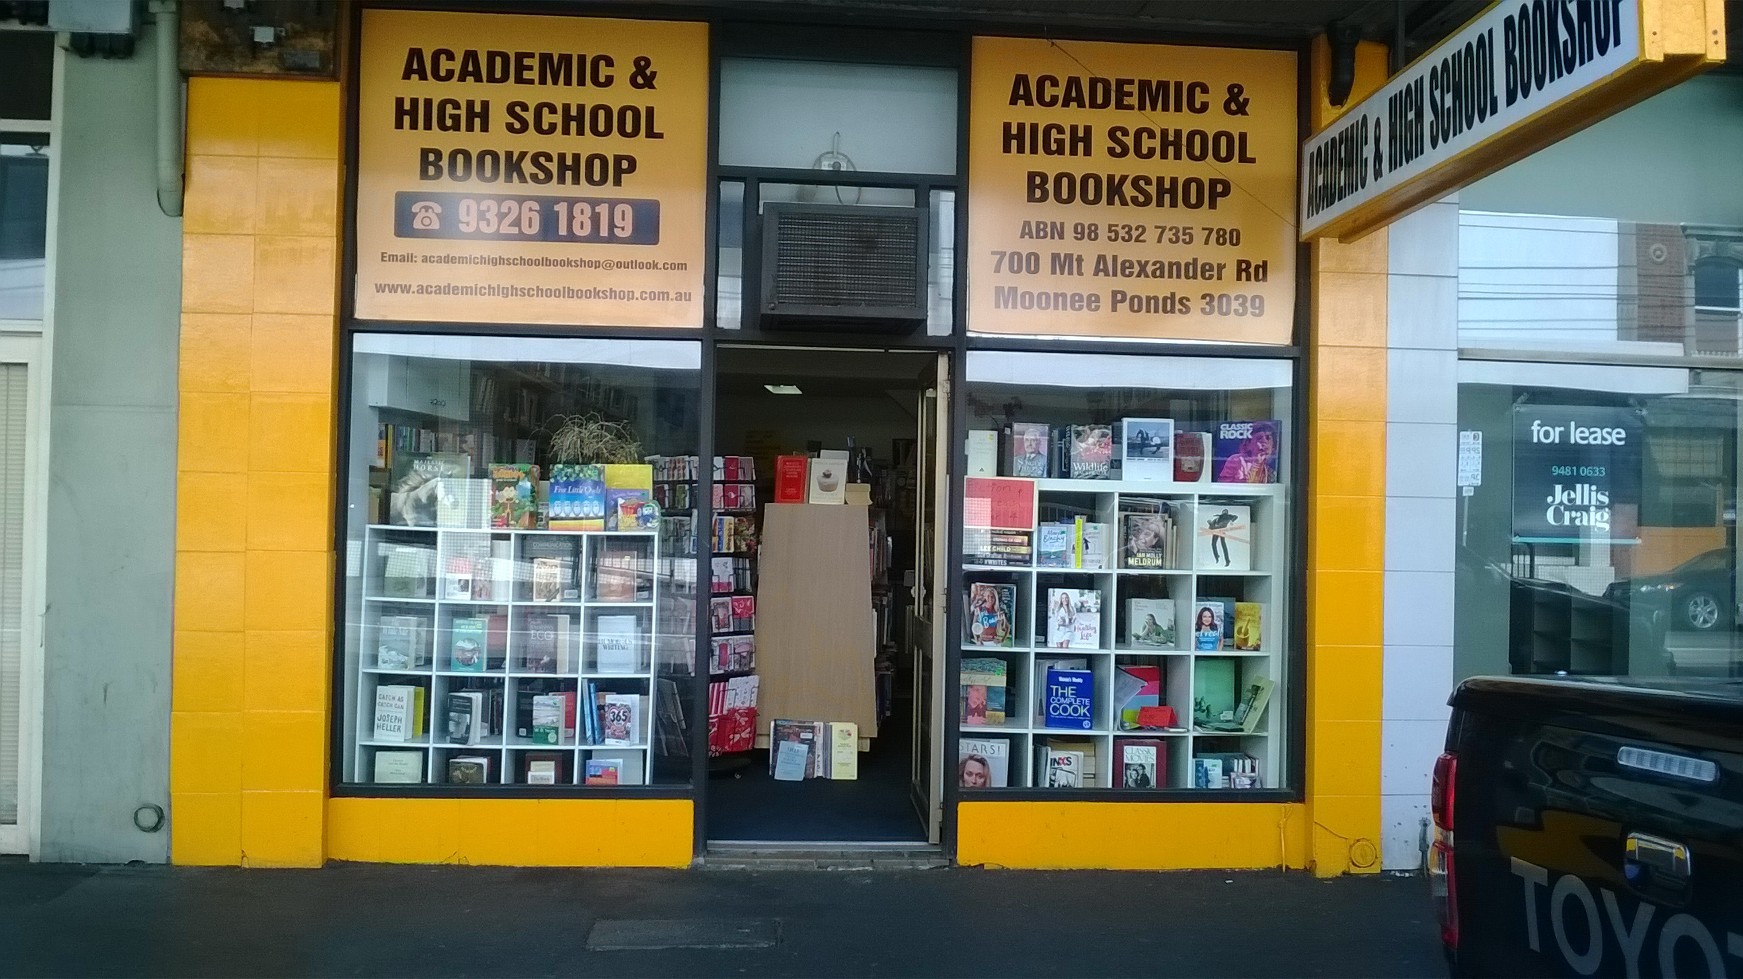 Academic & High School Bookshop